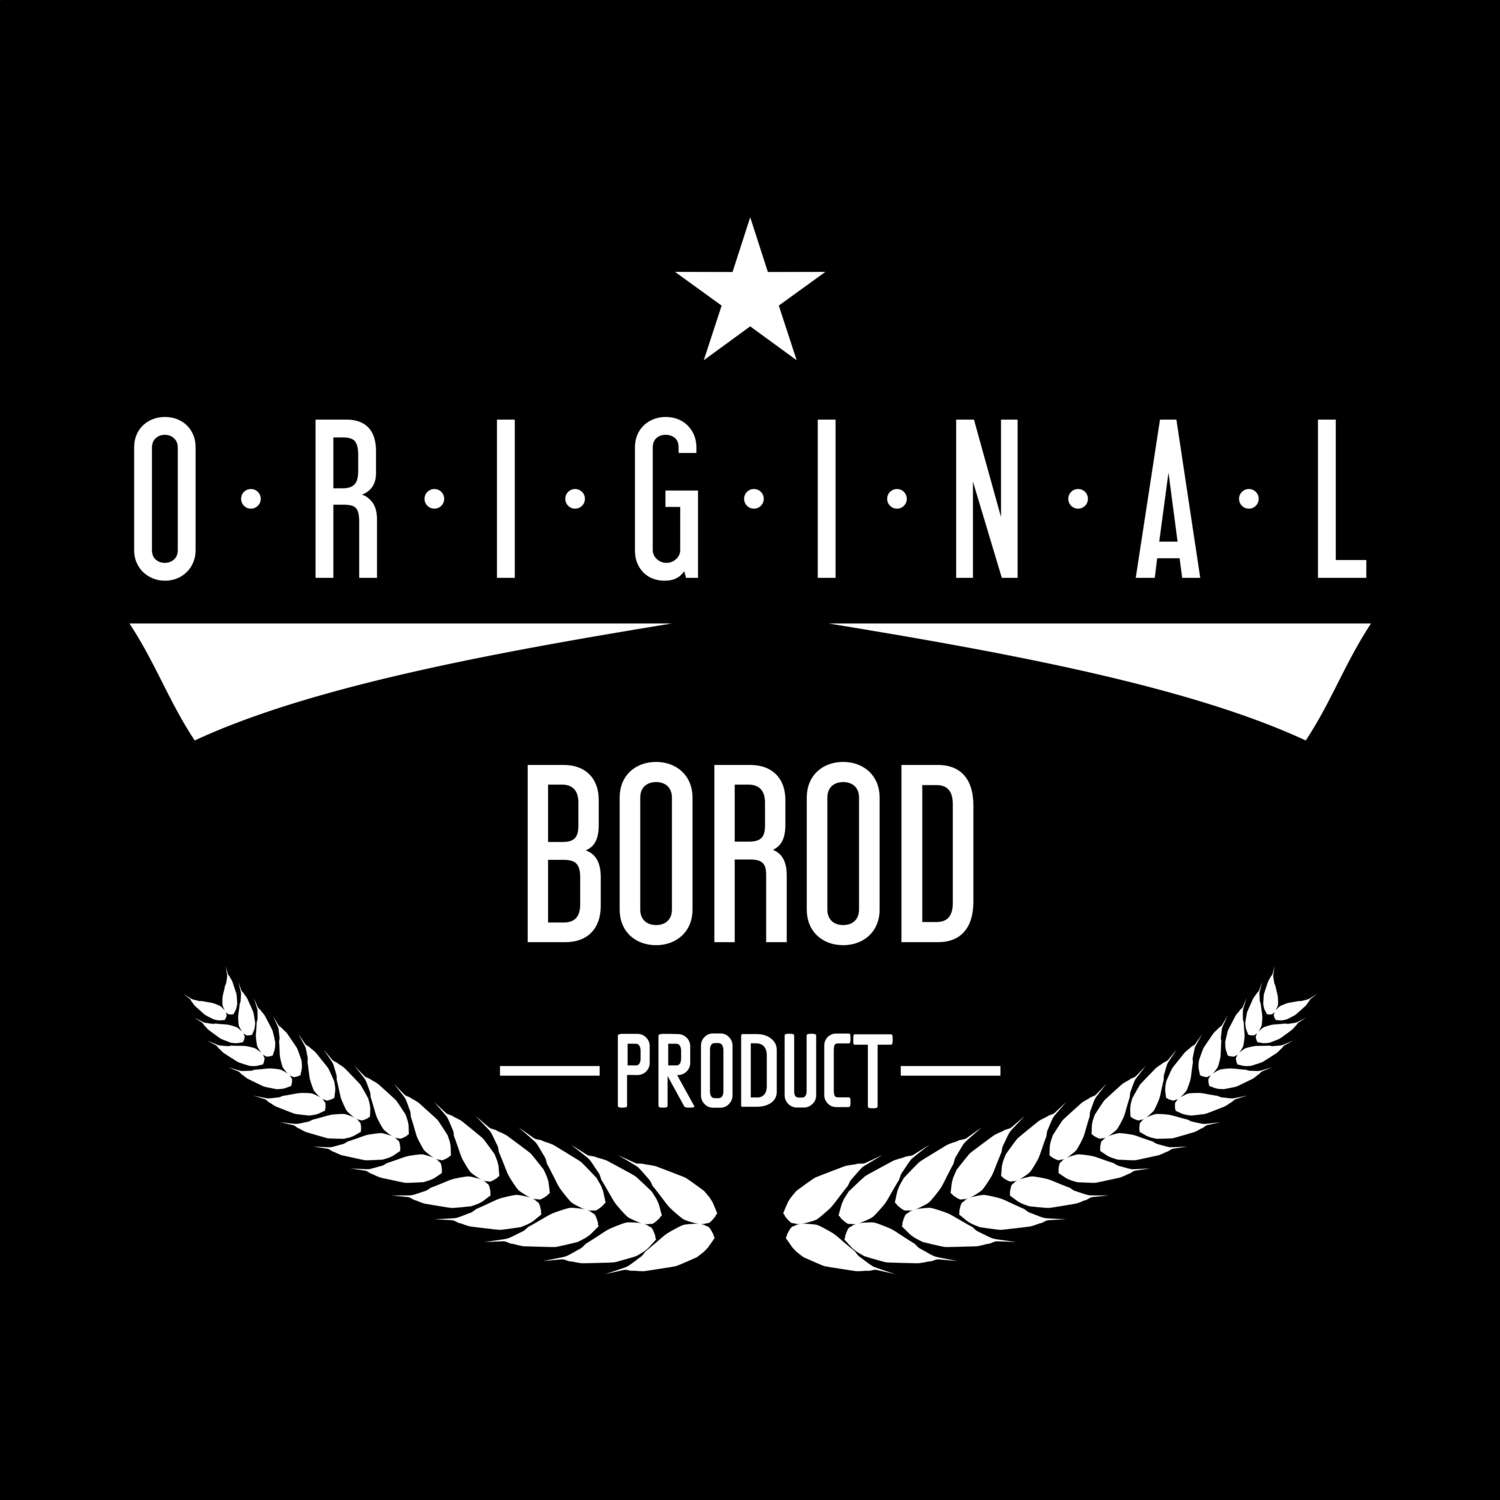 Borod T-Shirt »Original Product«